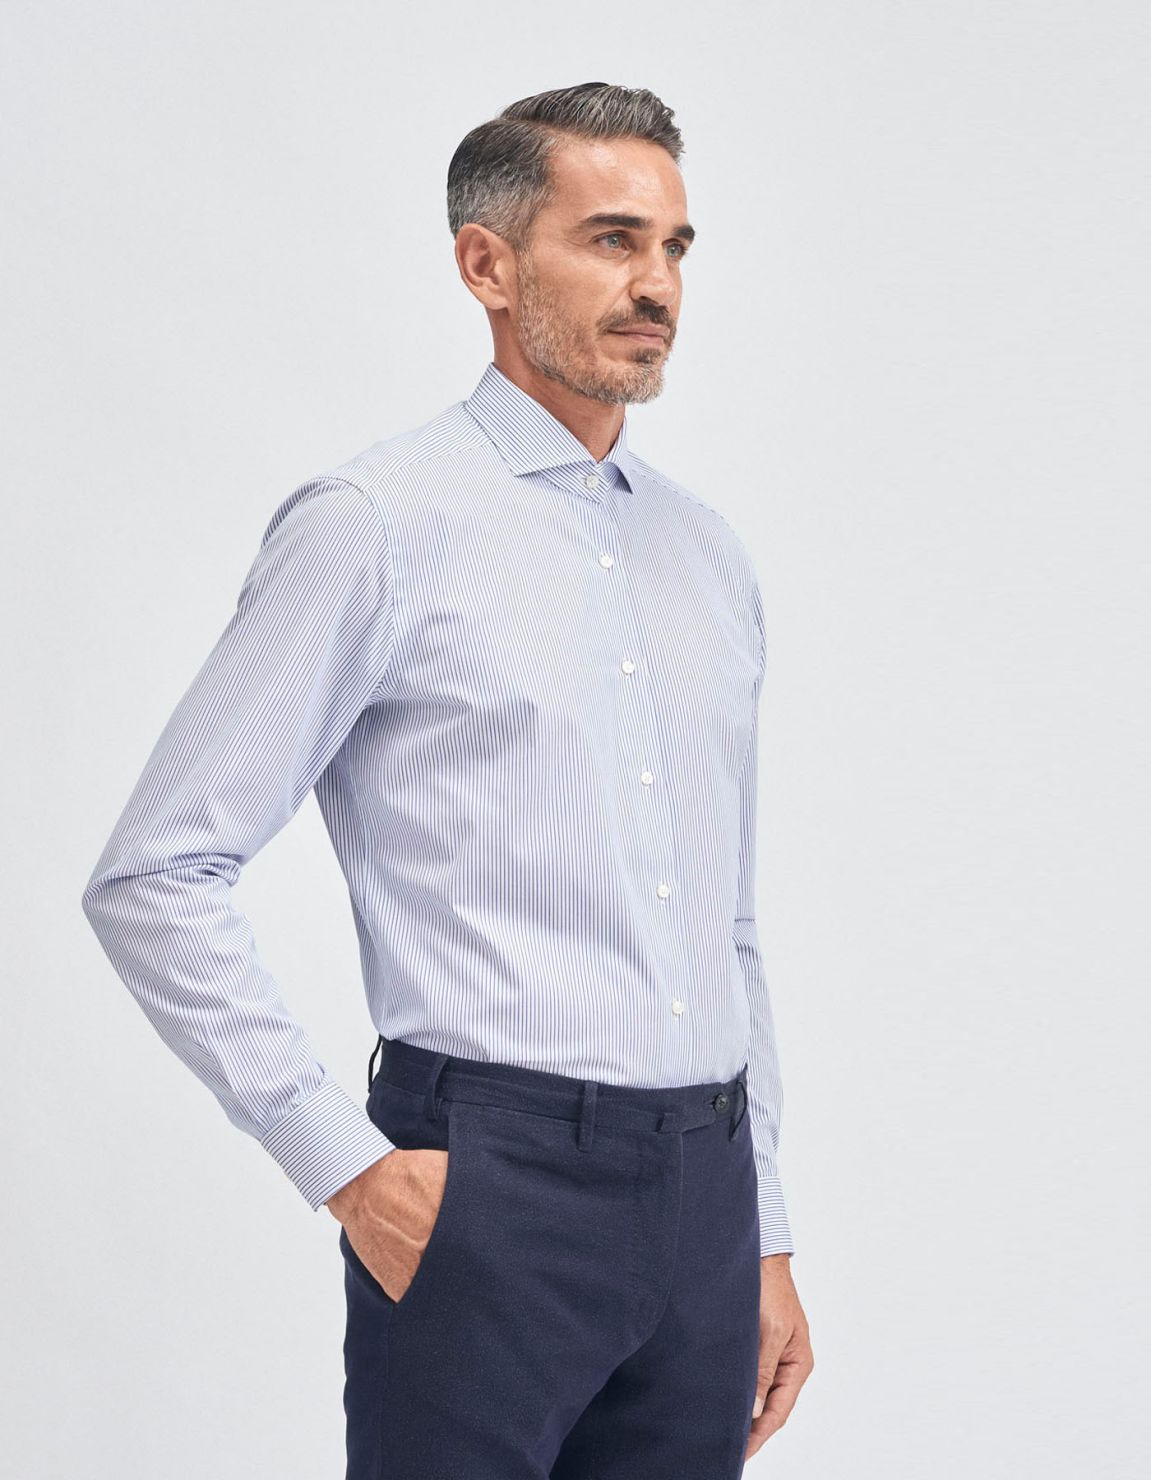 Shirt Collar cutaway Blue Poplin Tailor Custom Fit 1